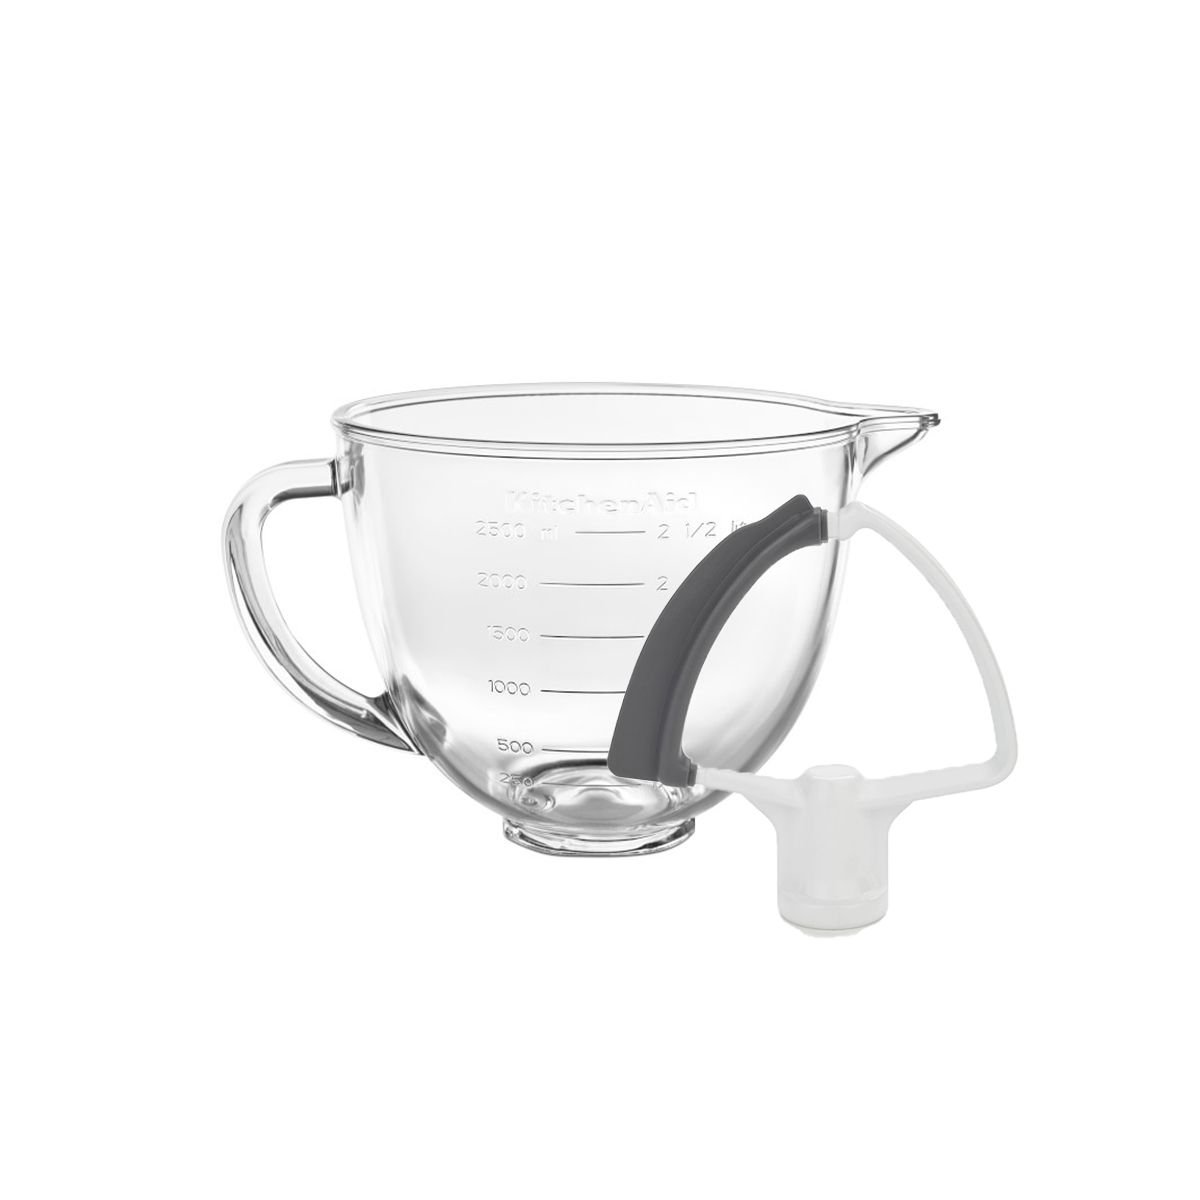  KitchenAid 3.5 Quart Tilt-Head Glass Bowl - KSM35GB